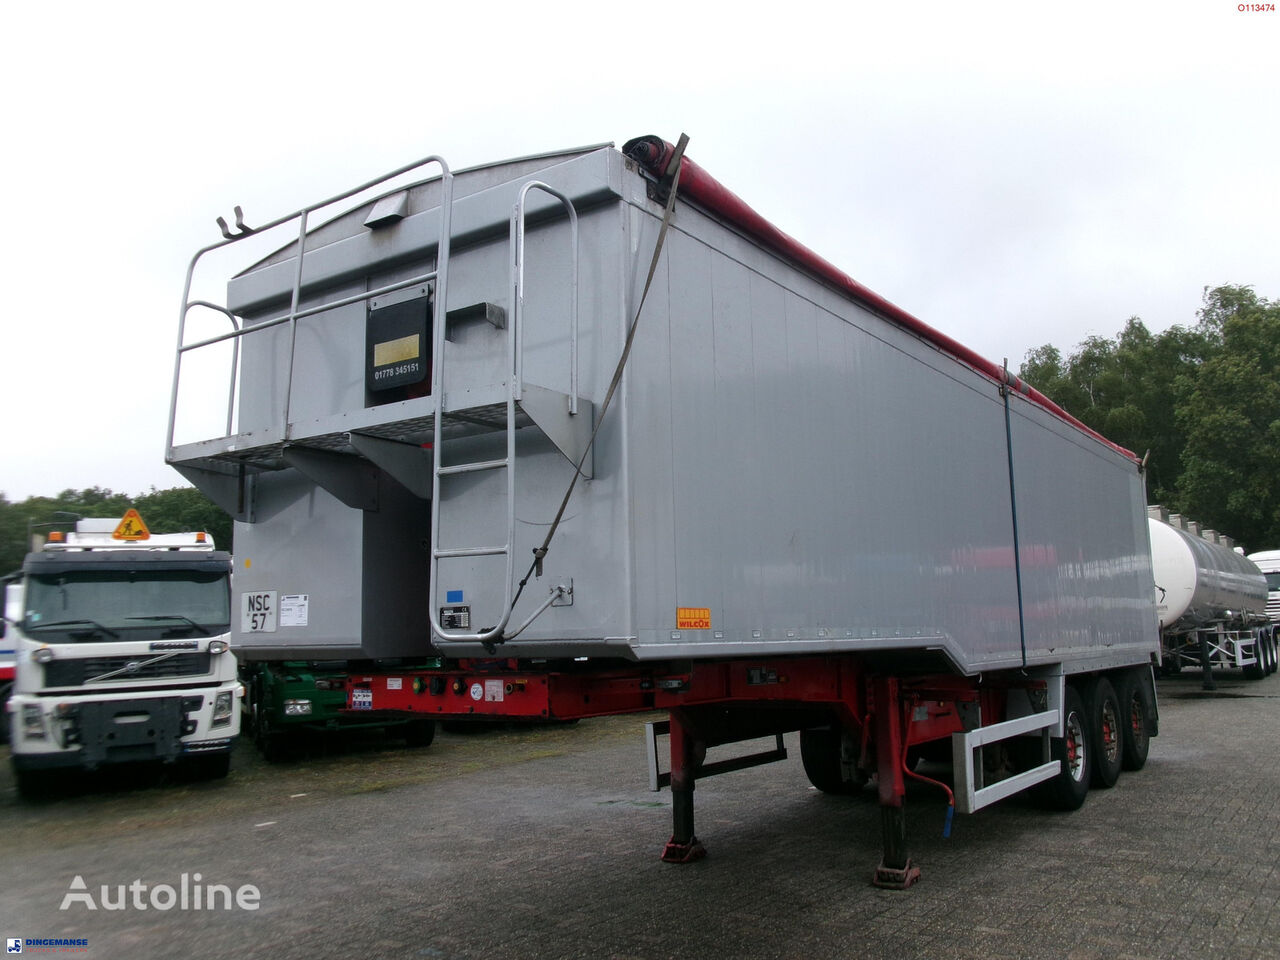 Wilcox Tipper trailer alu 55 m3 + tarpaulin semirremolque volquete